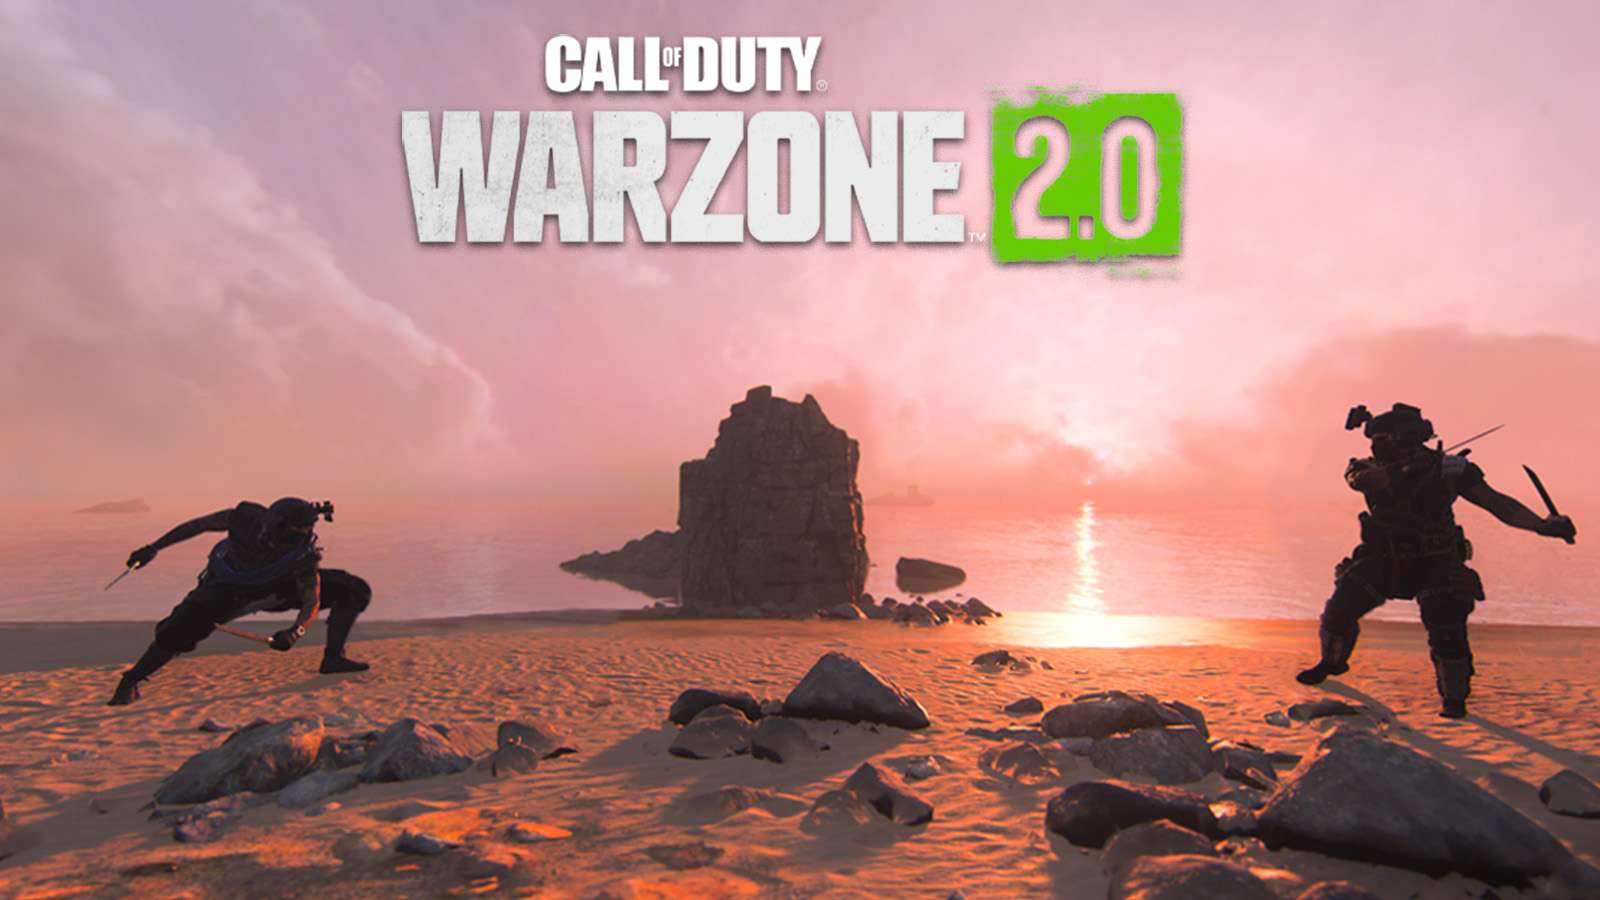 Warzone 2 image with logo